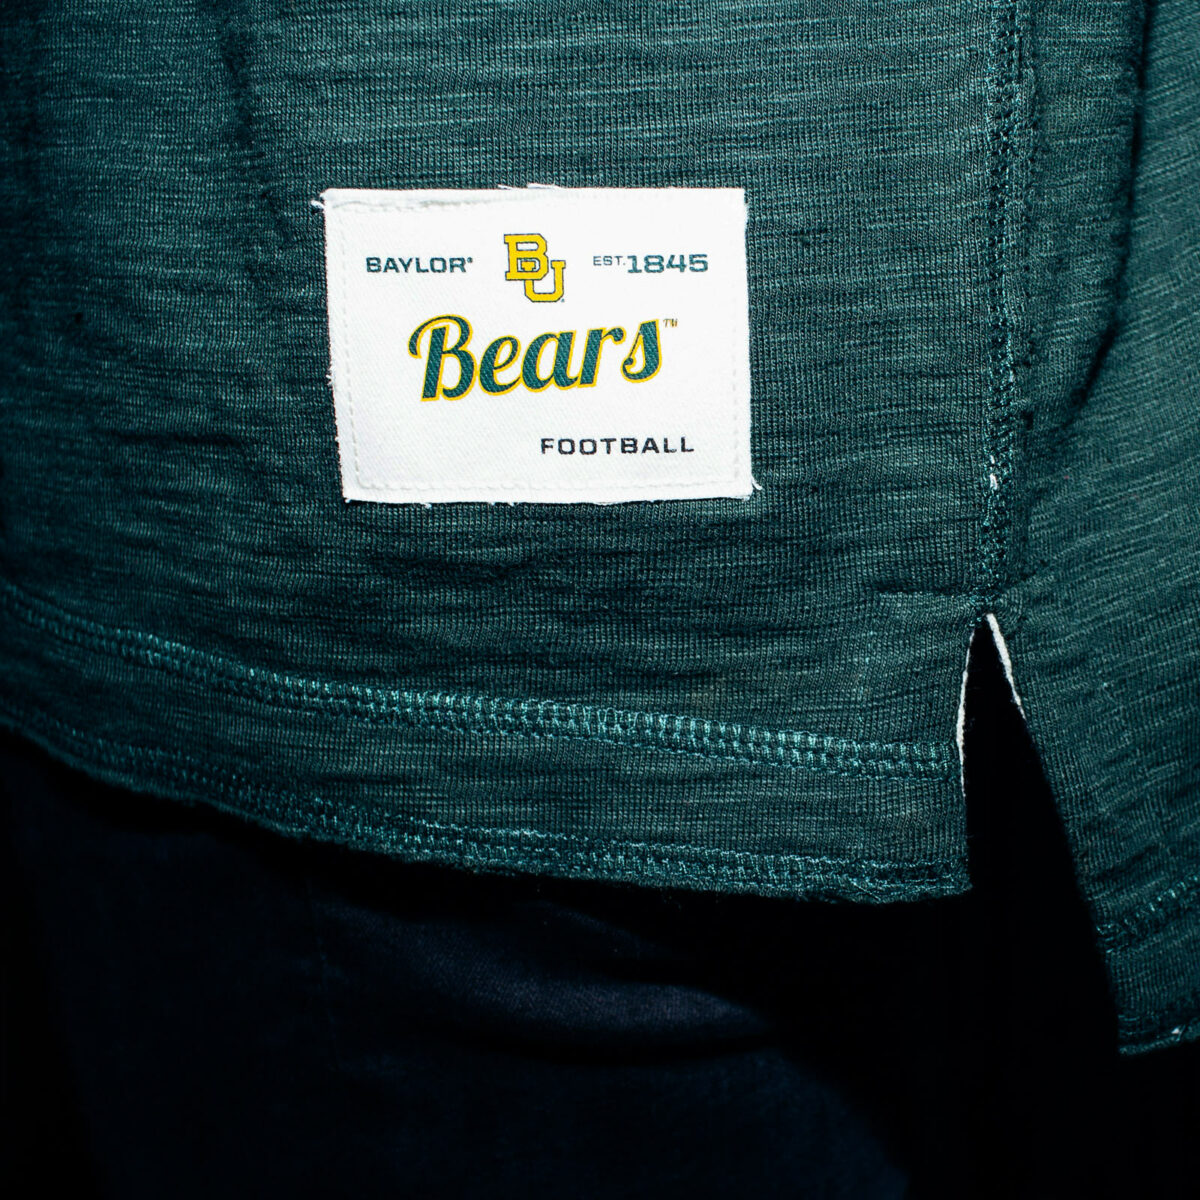 College Team Baylor Bears Sweatshirt buy